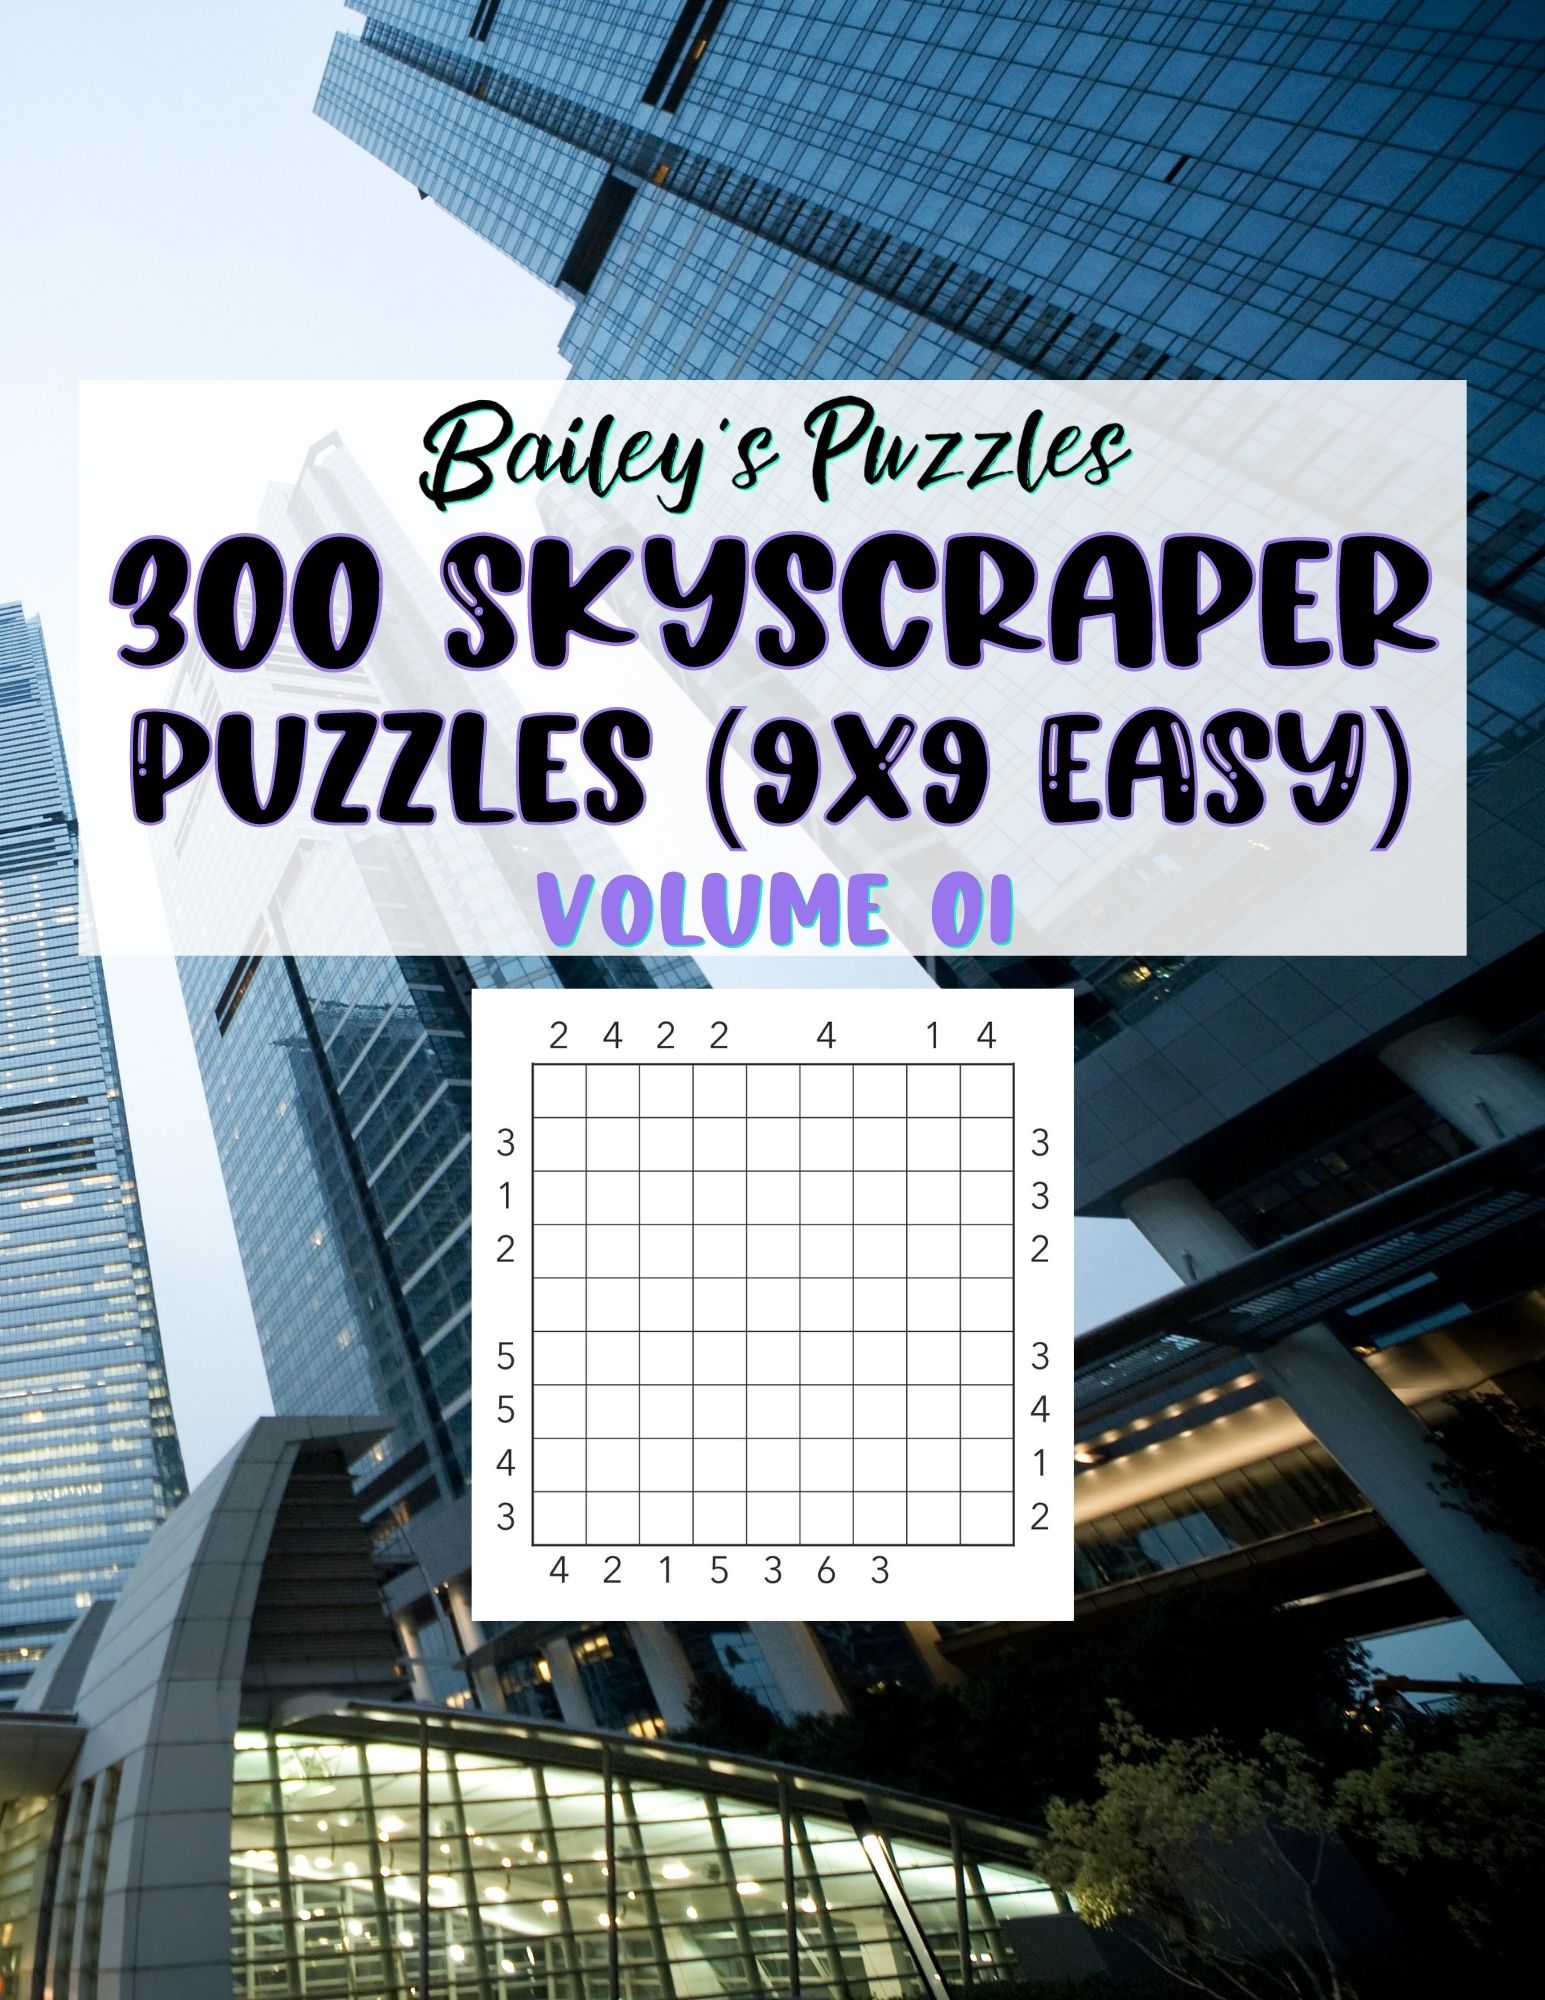 Front Cover - 450 Skyscraper Puzzles (9x9, easy)